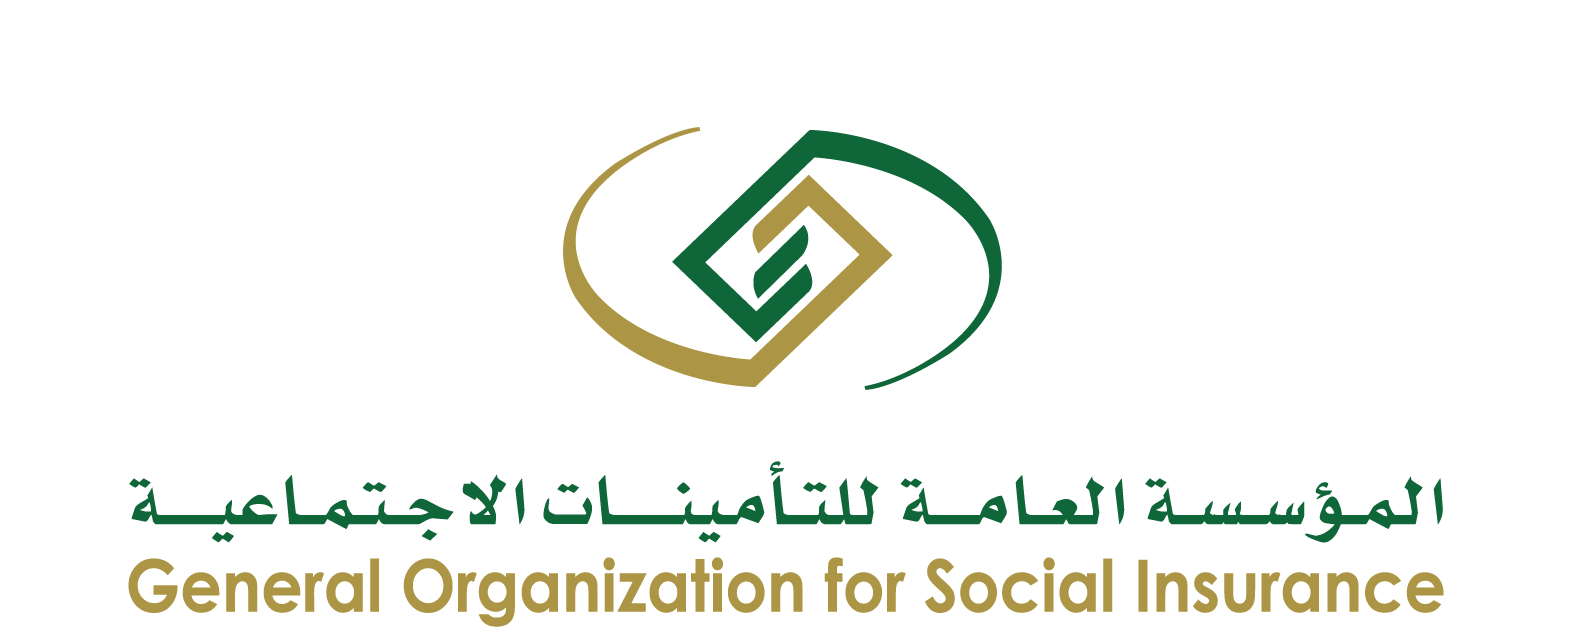 General Organization for Social Insurance (GOSI)